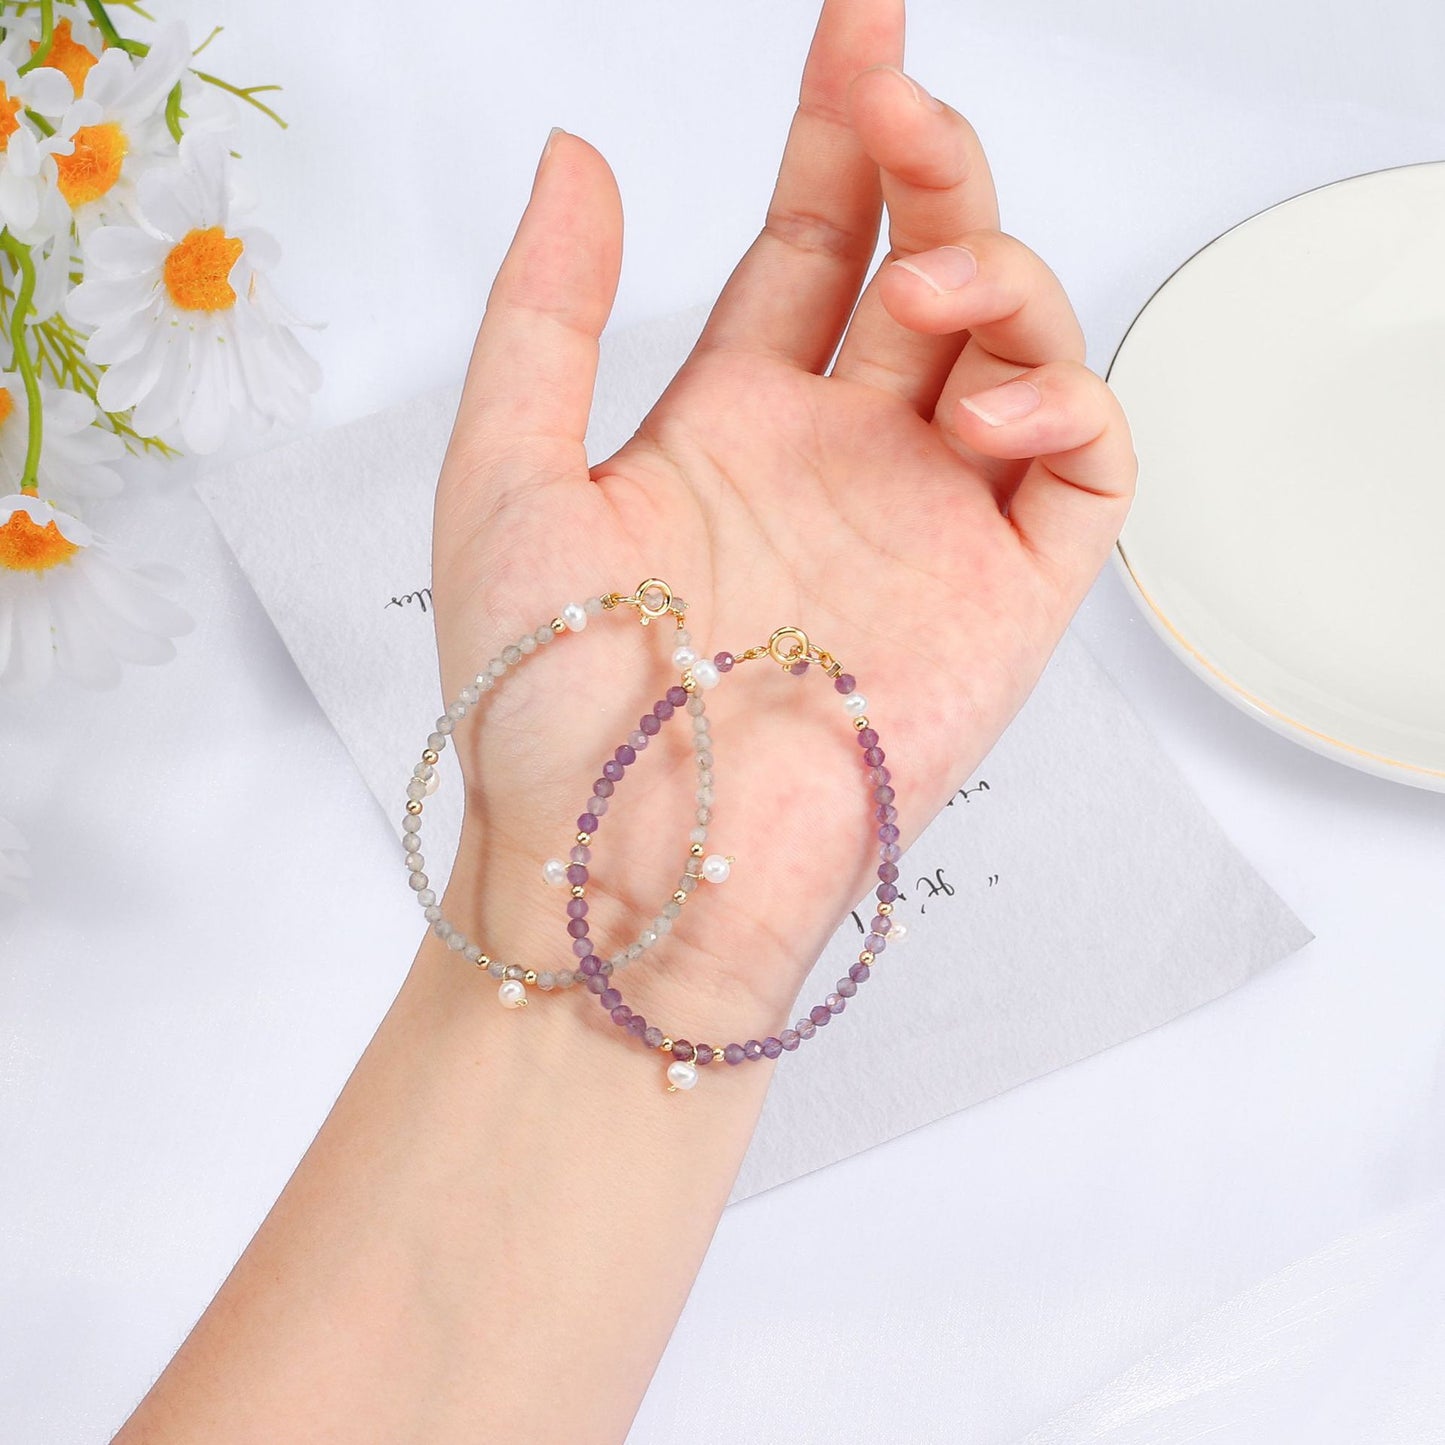 Lavender Amethyst and Moonlight Pearl Sterling Silver Bracelet